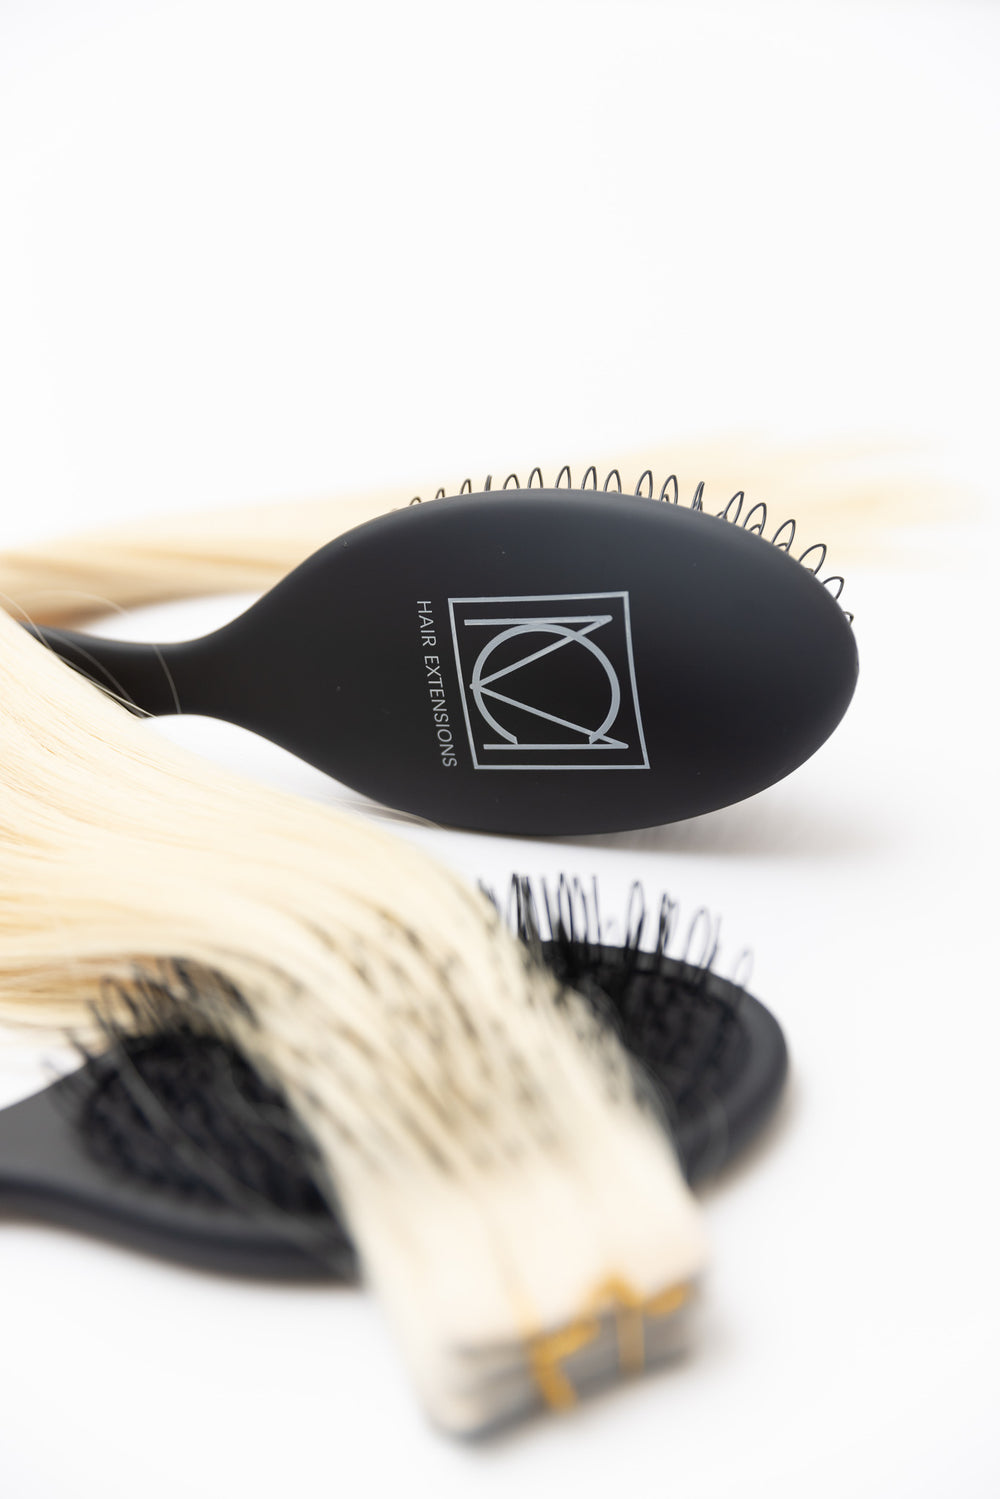 CM Hair Extension Loop Brush-Christian Michael Hair Extensions